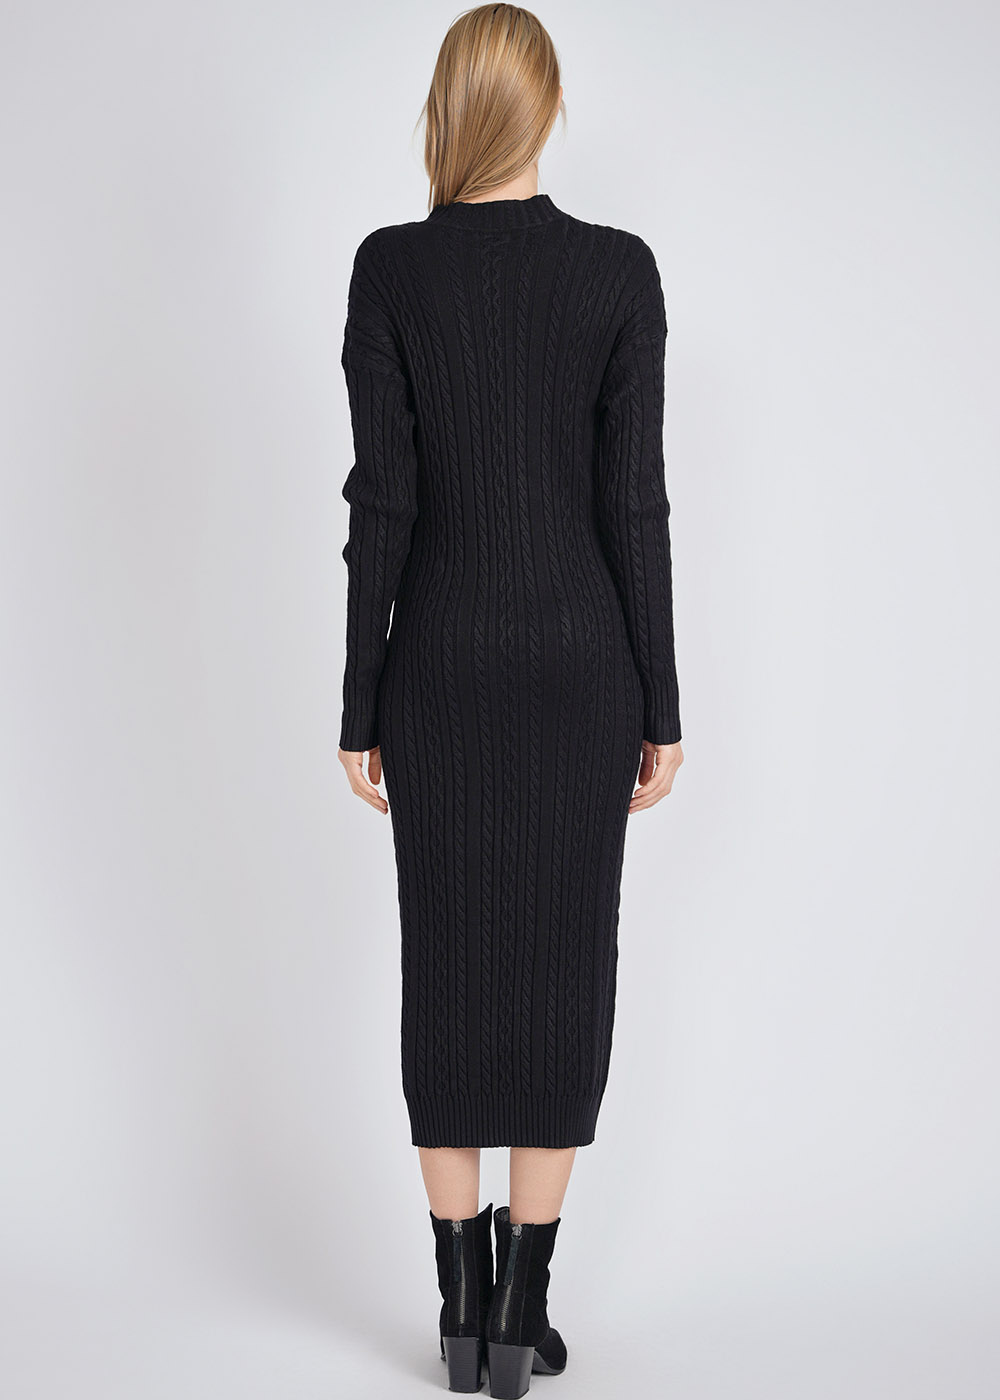 Black Dress Delight: Cable Knit Texture & Buttons